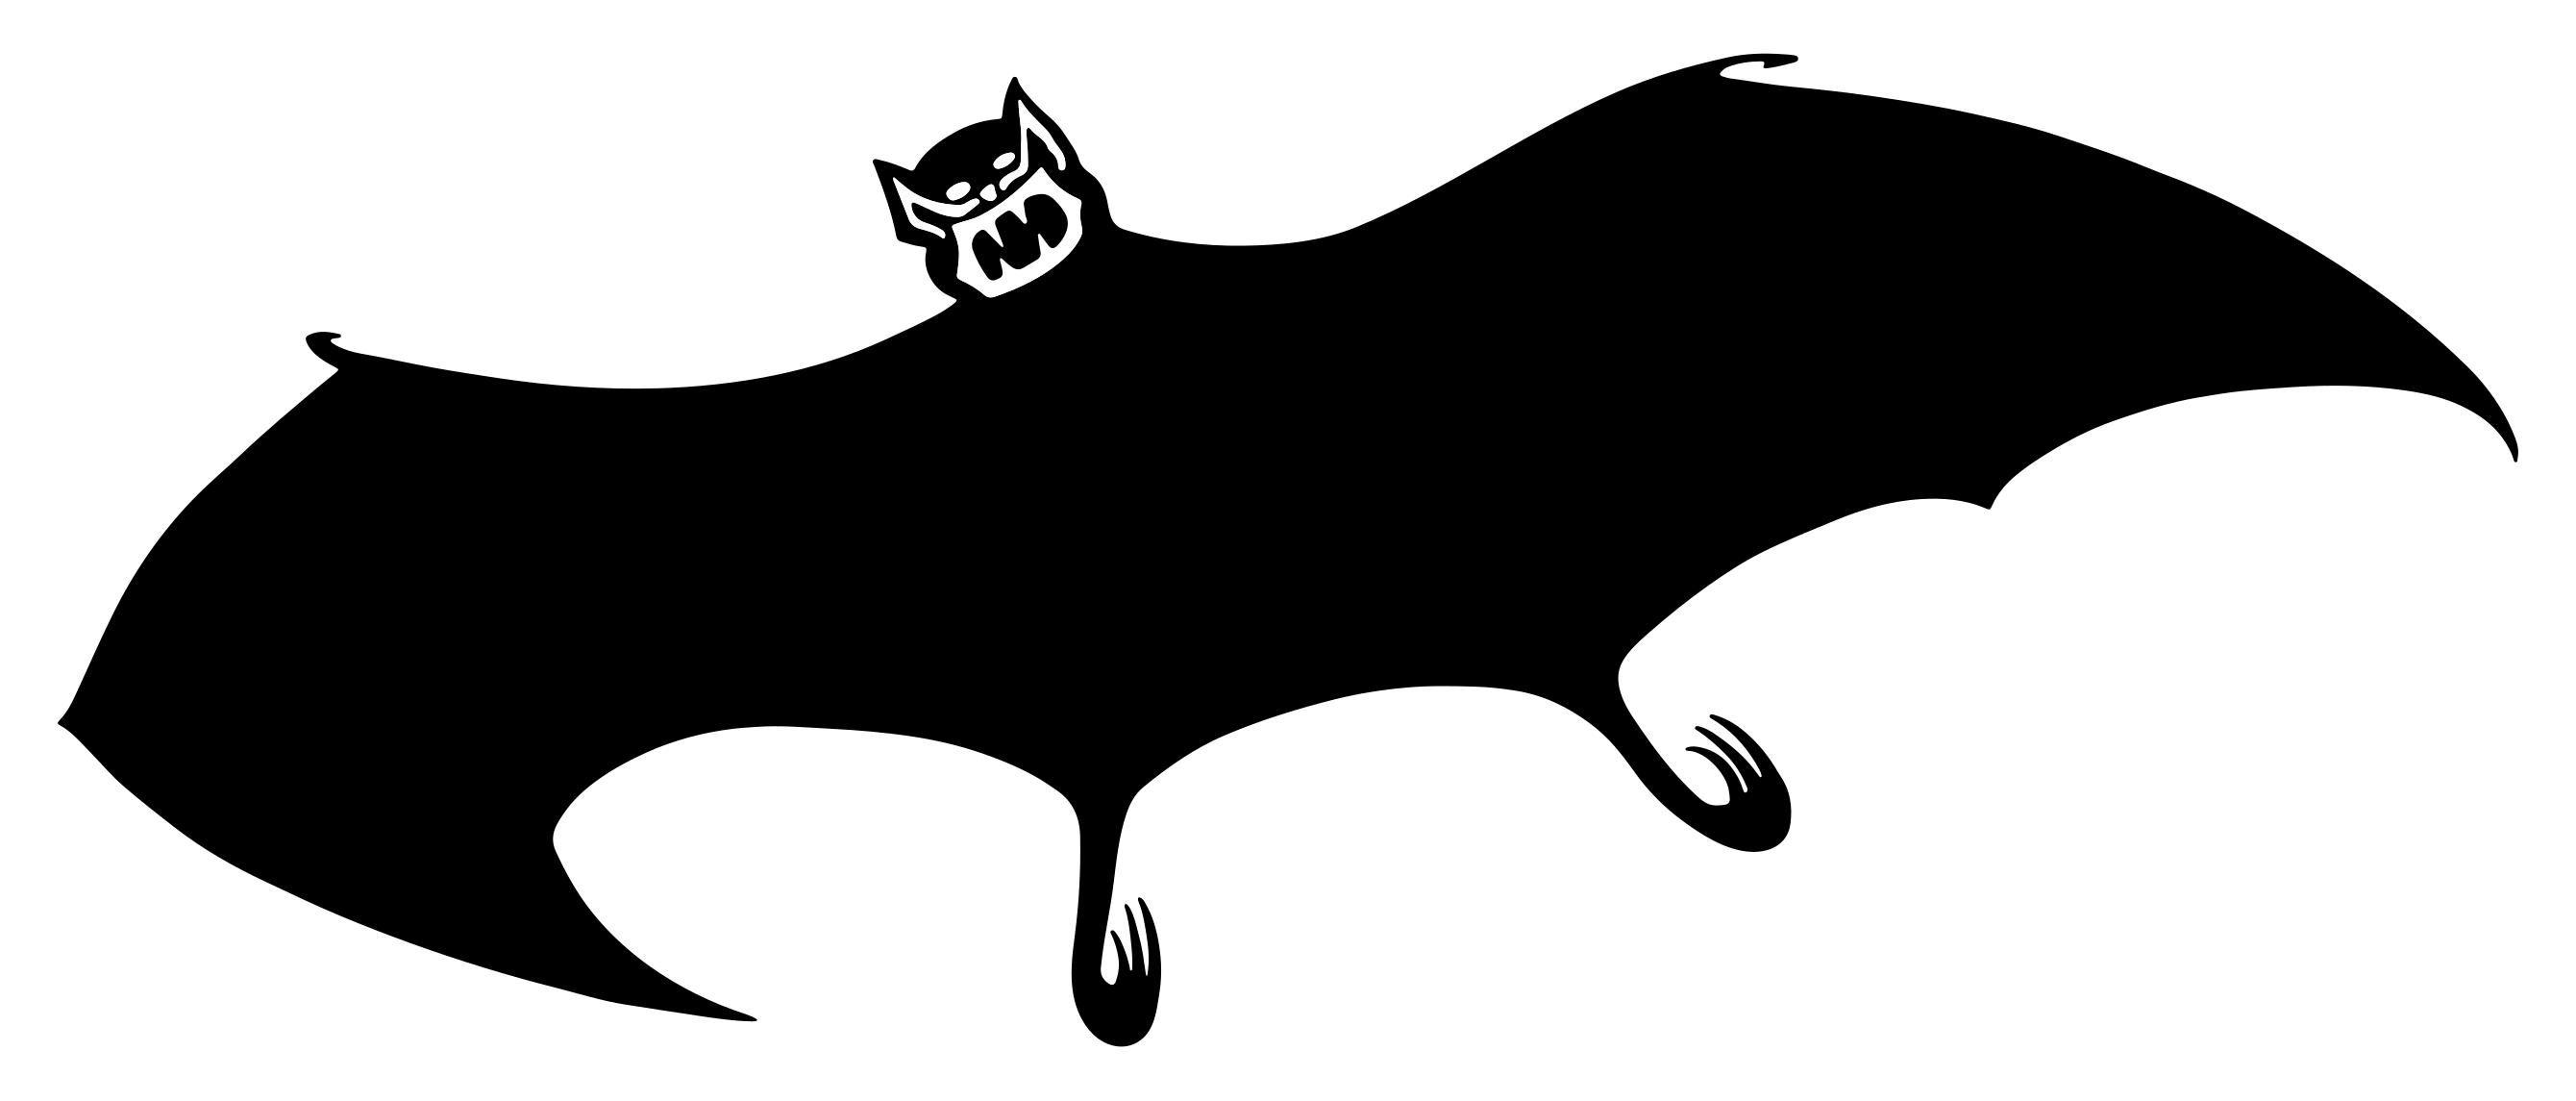 Dracula Bat Logo - Dracula Bat Clipart - Design Droide